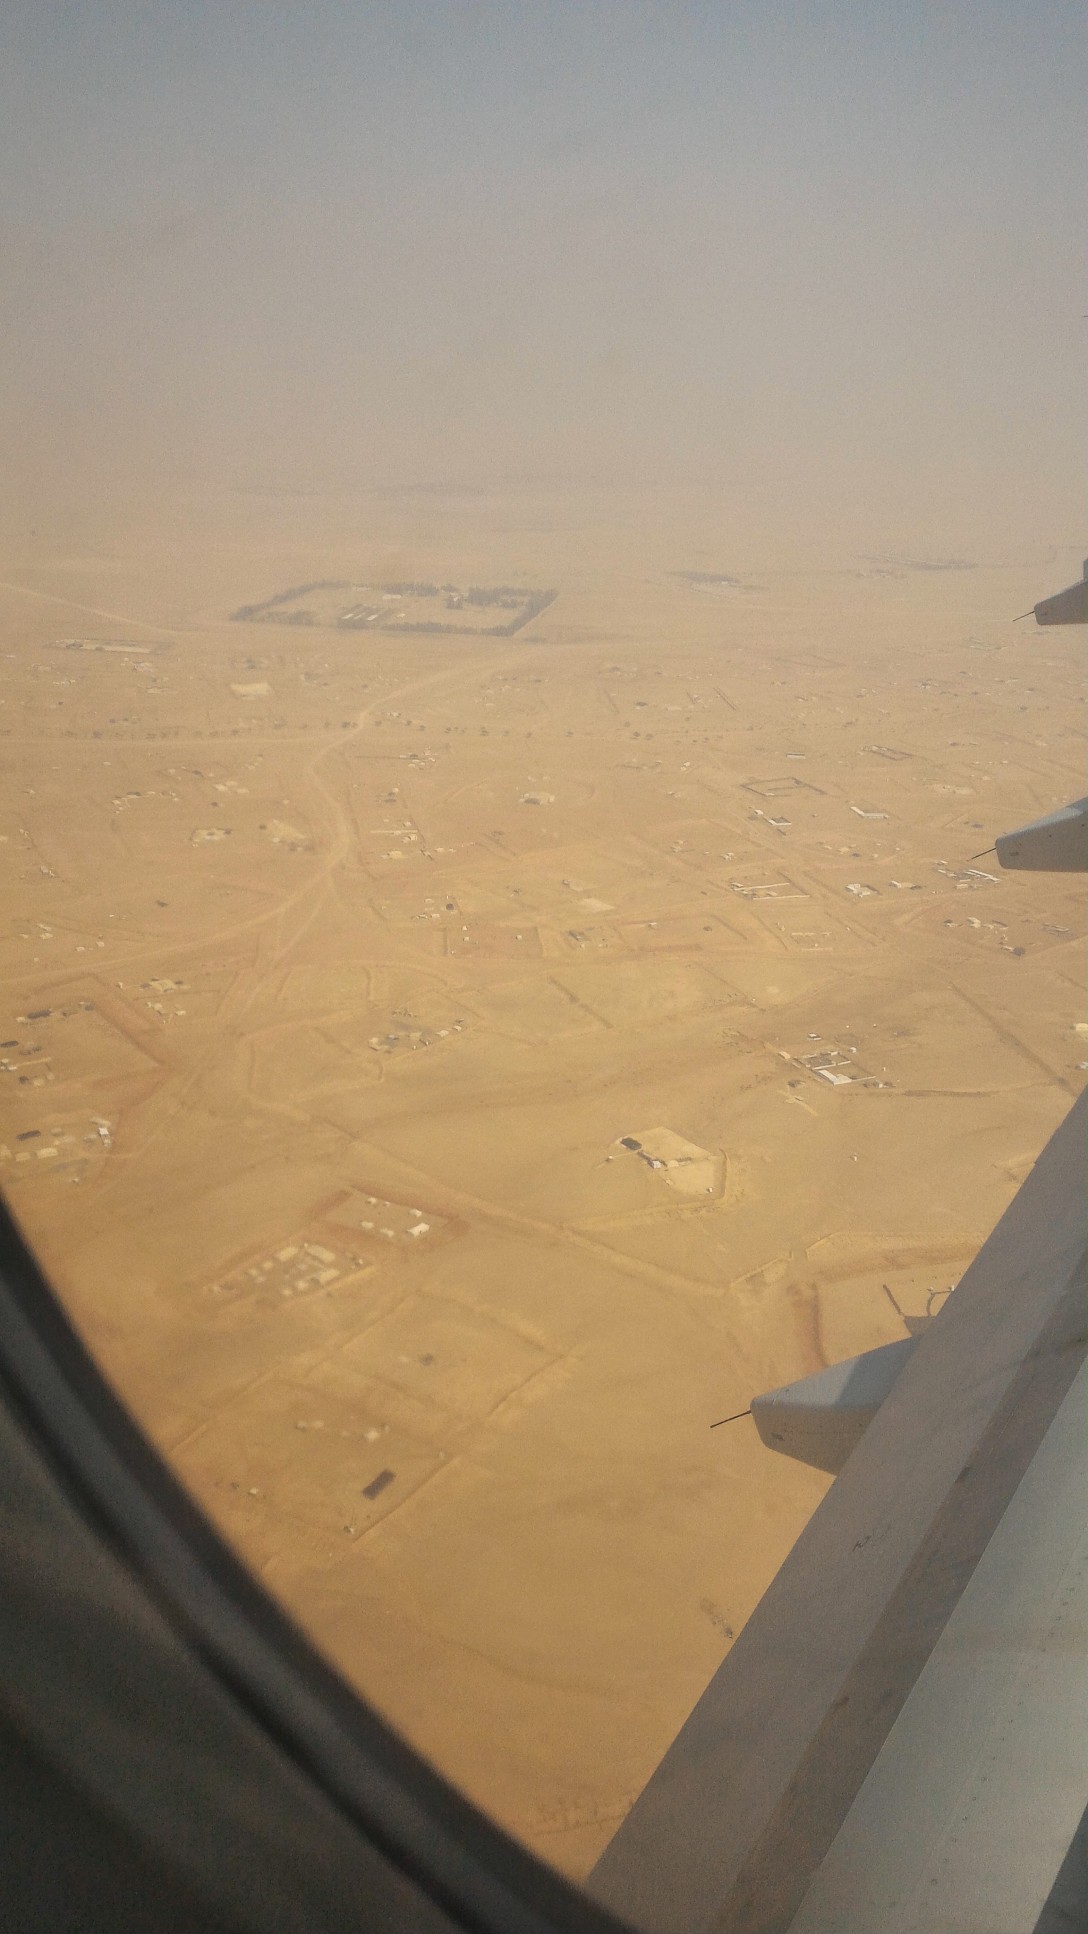 View of area around Riyadh--all desert